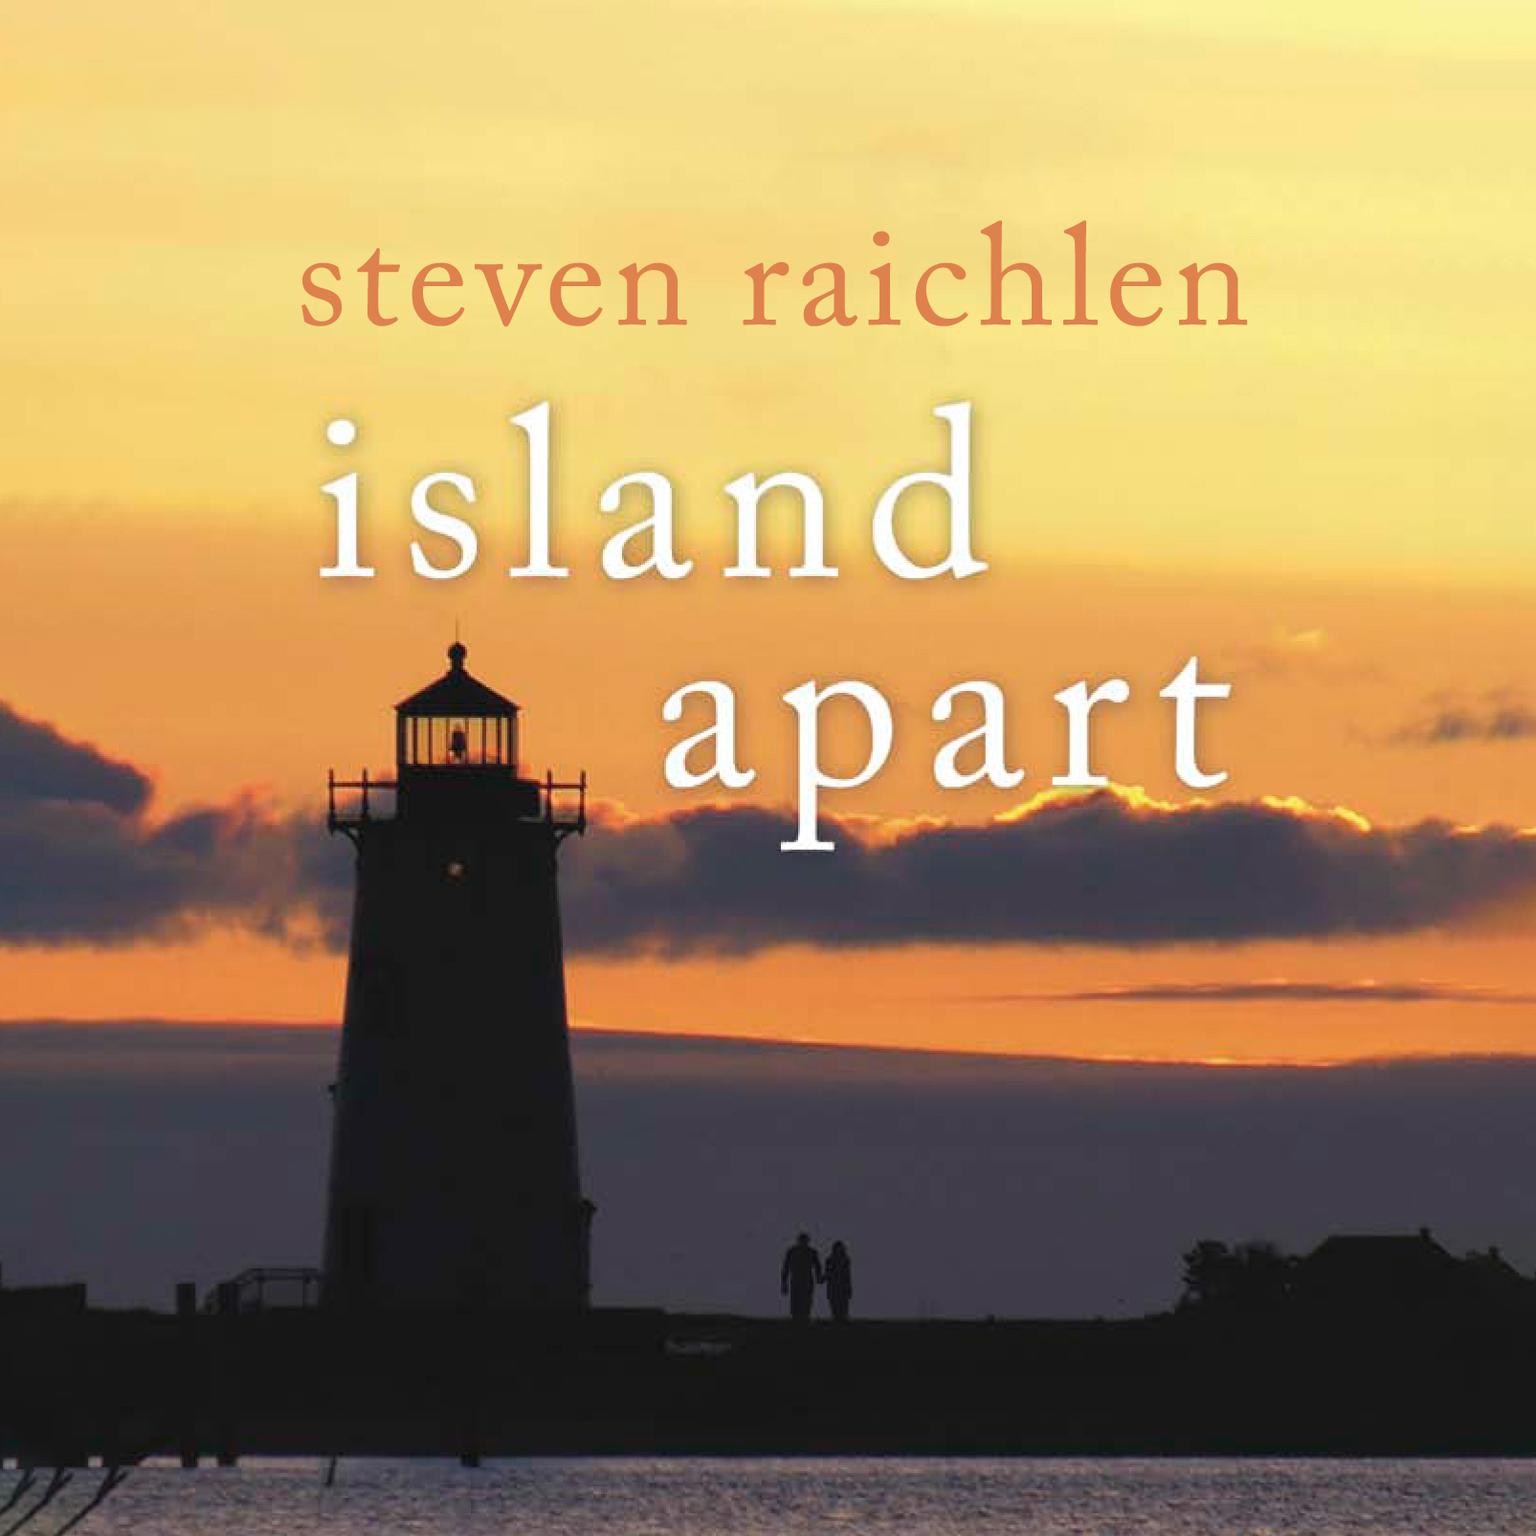 Island Apart Audiobook, by Steven Raichlen